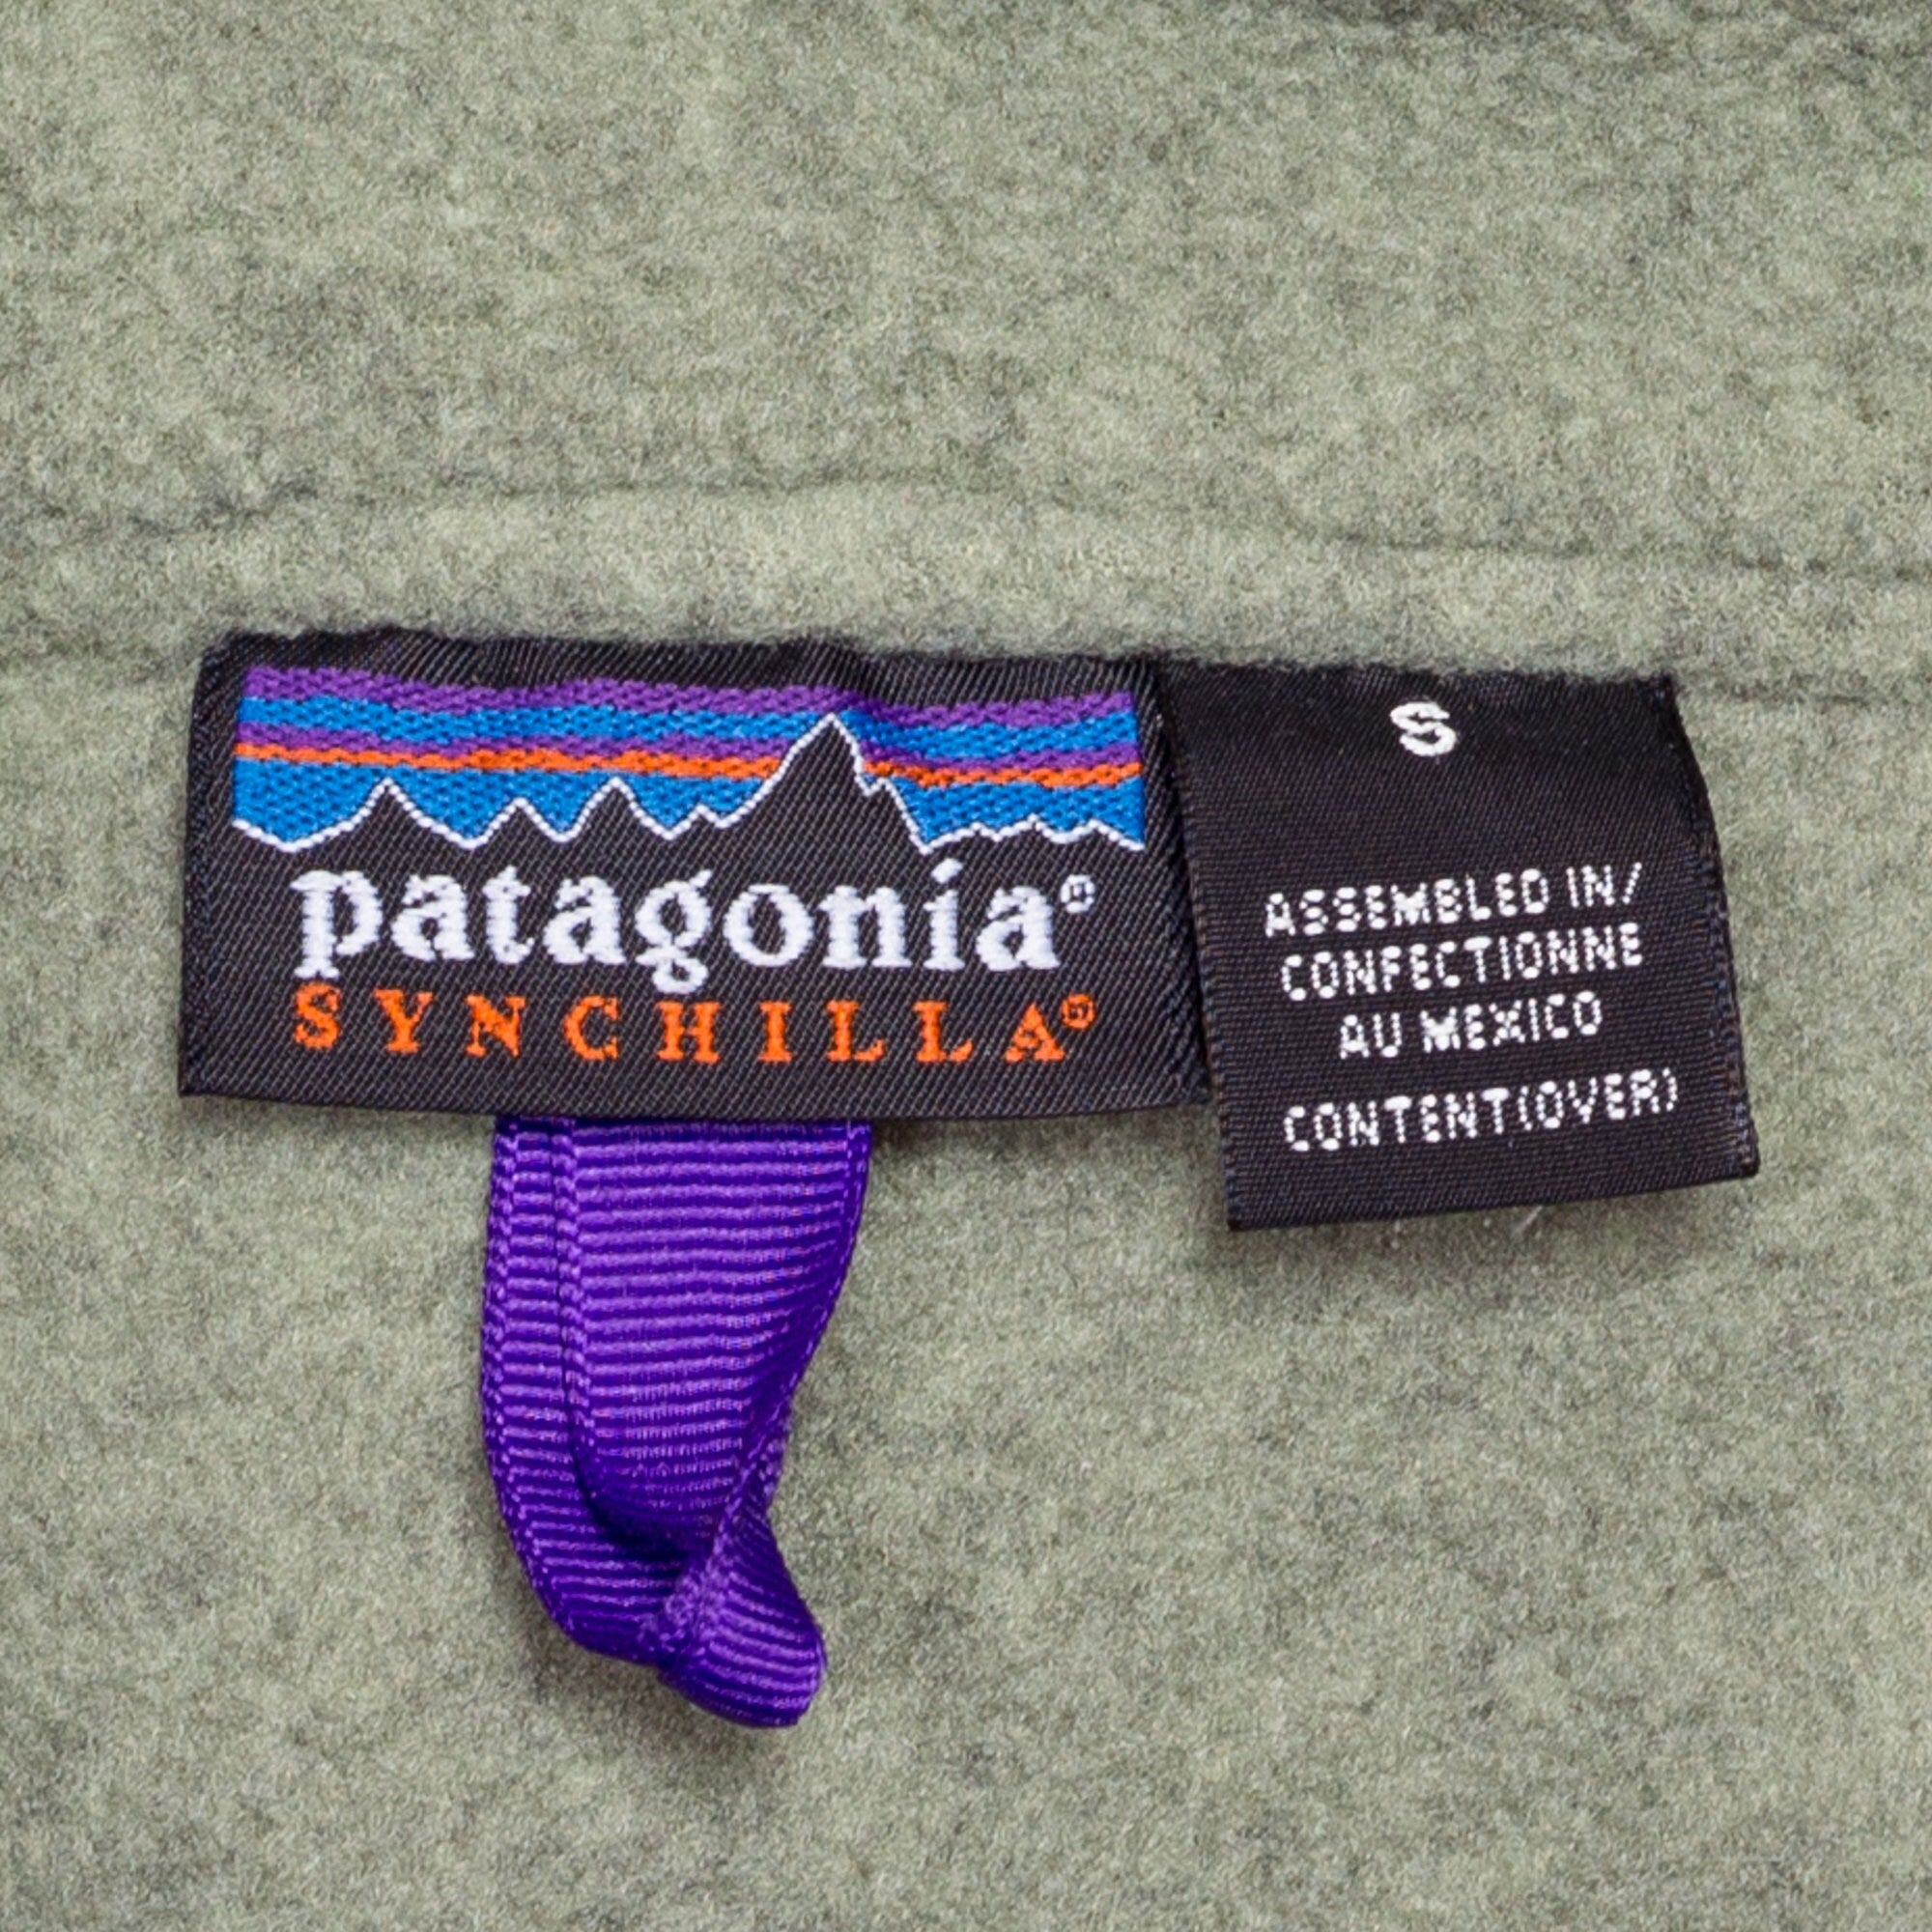 Vintage Patagonia Sage Green Synchilla Fleece Half Zip Sweatshirt